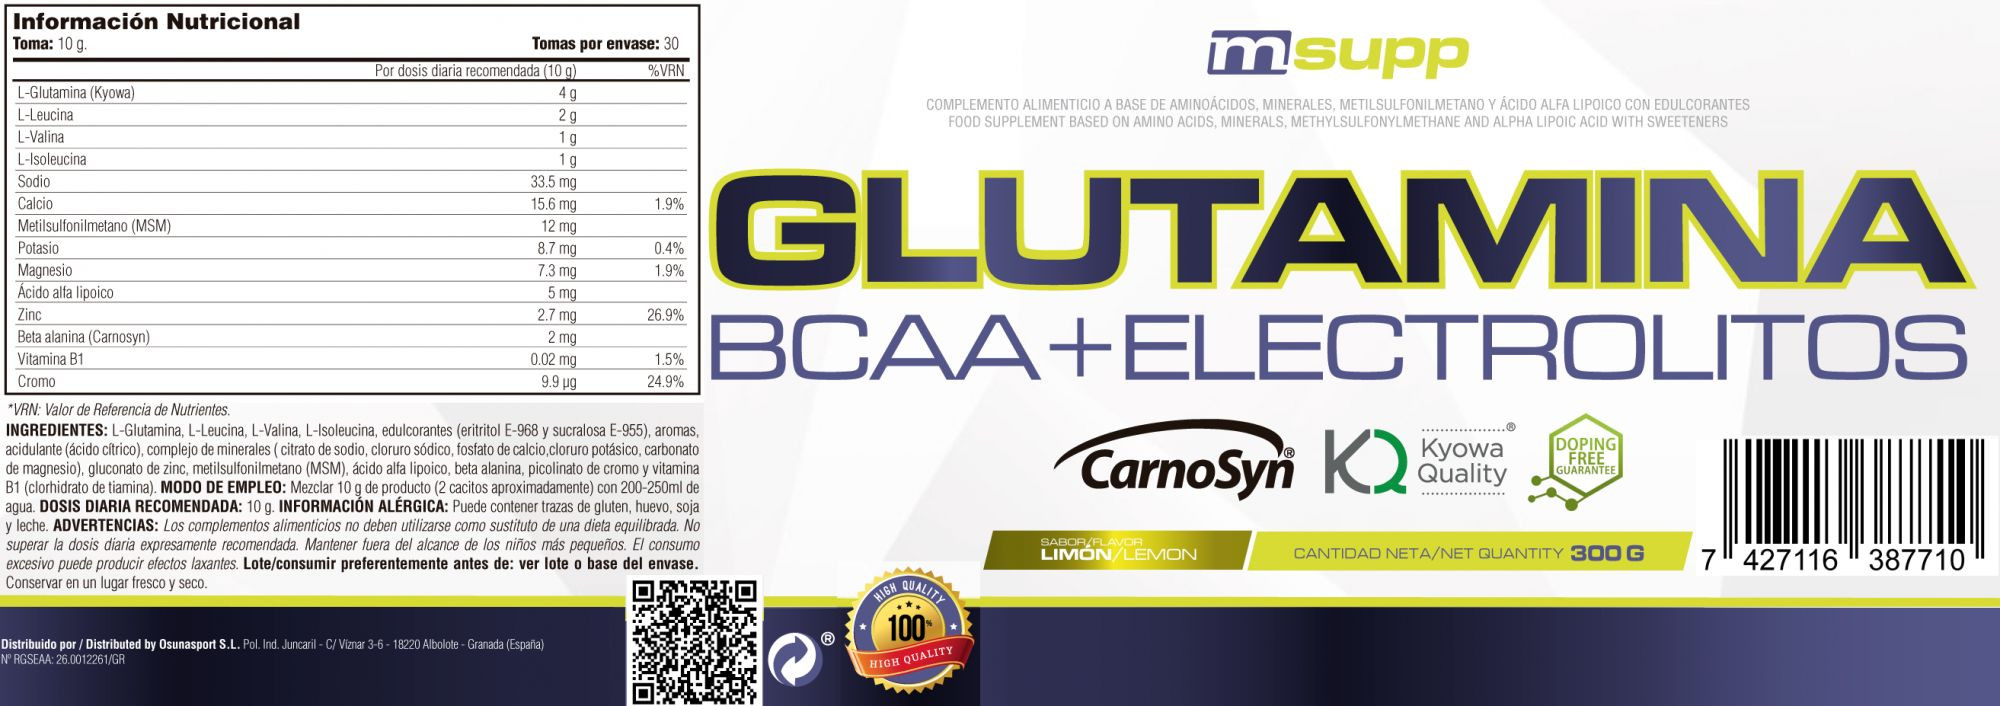 Glutamina + Bcaa + Electrolitos - 300g De Mm Supplements Sabor Limon